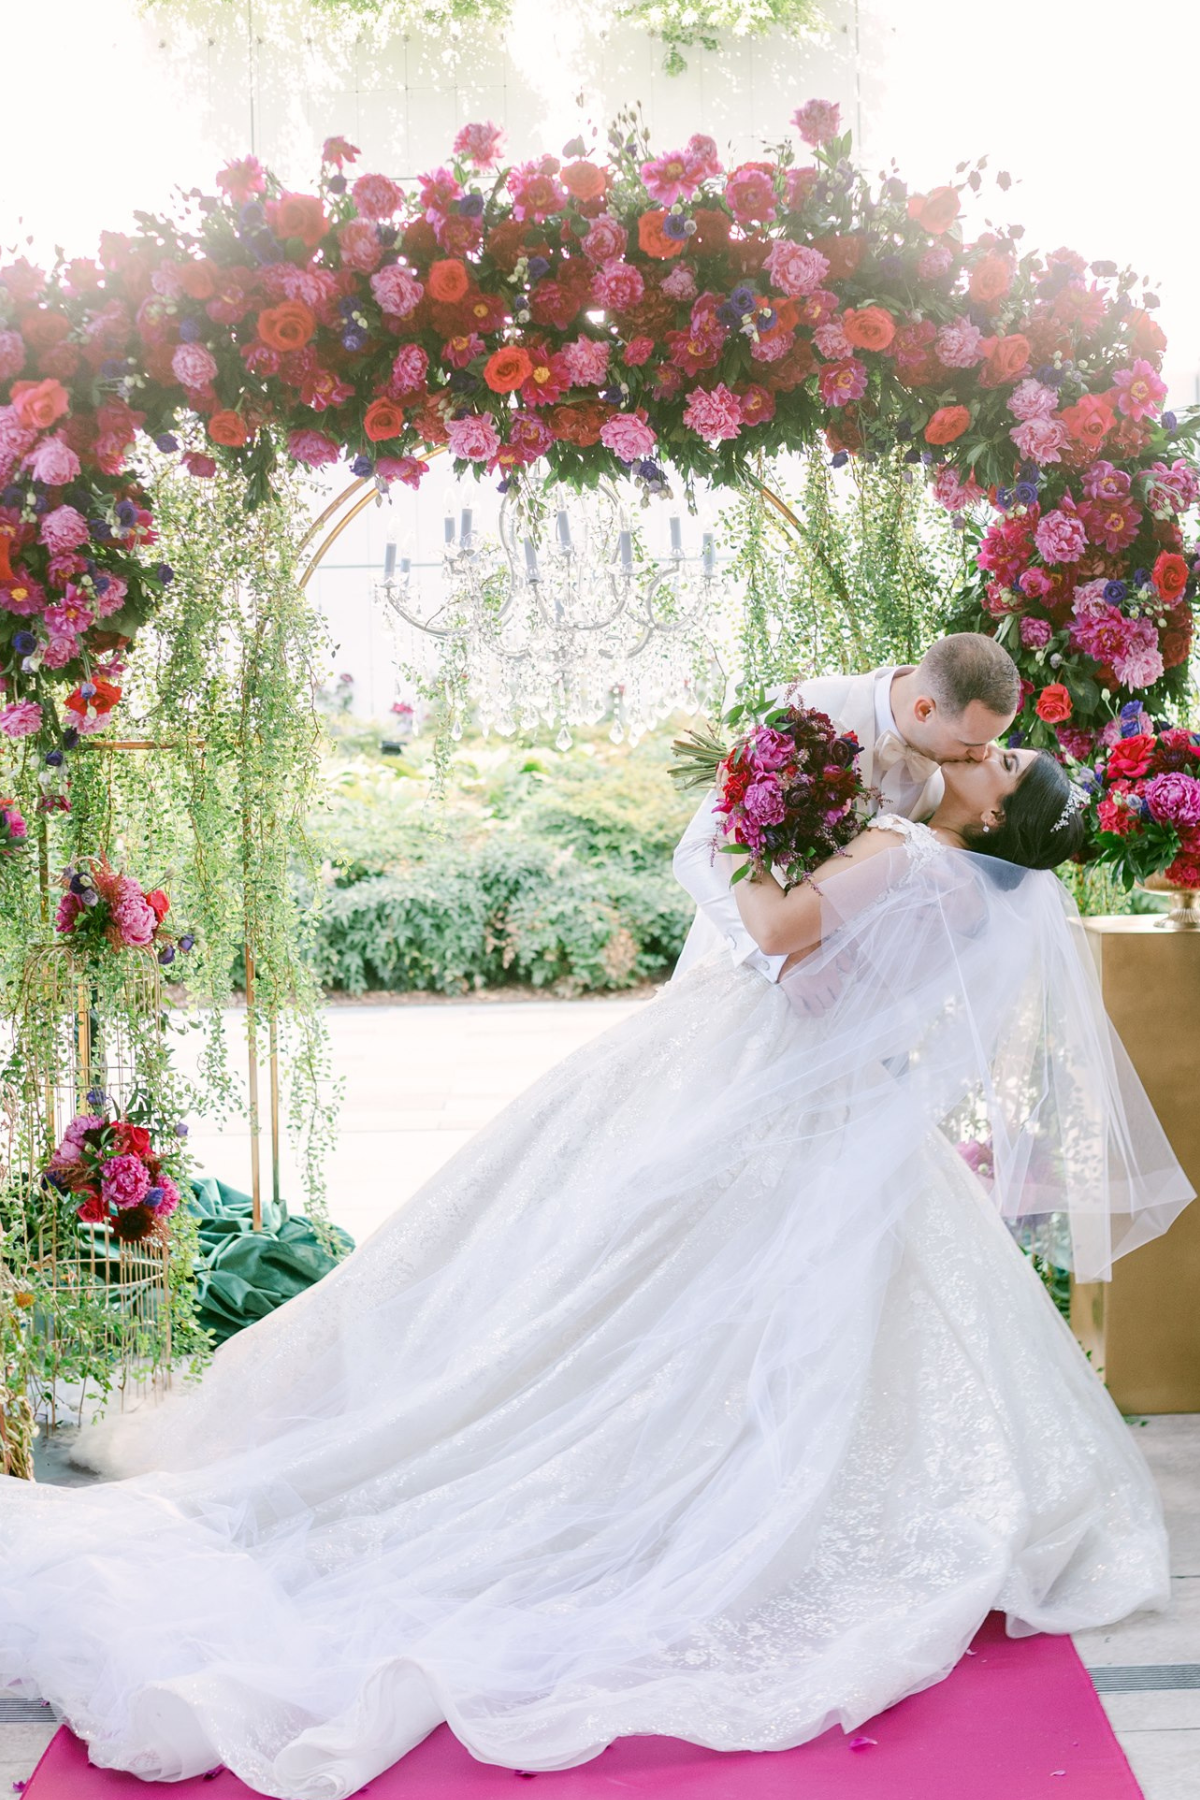 secret-garden-wedding-red-purple-pink-flowers-greenery-arch-bride-groom